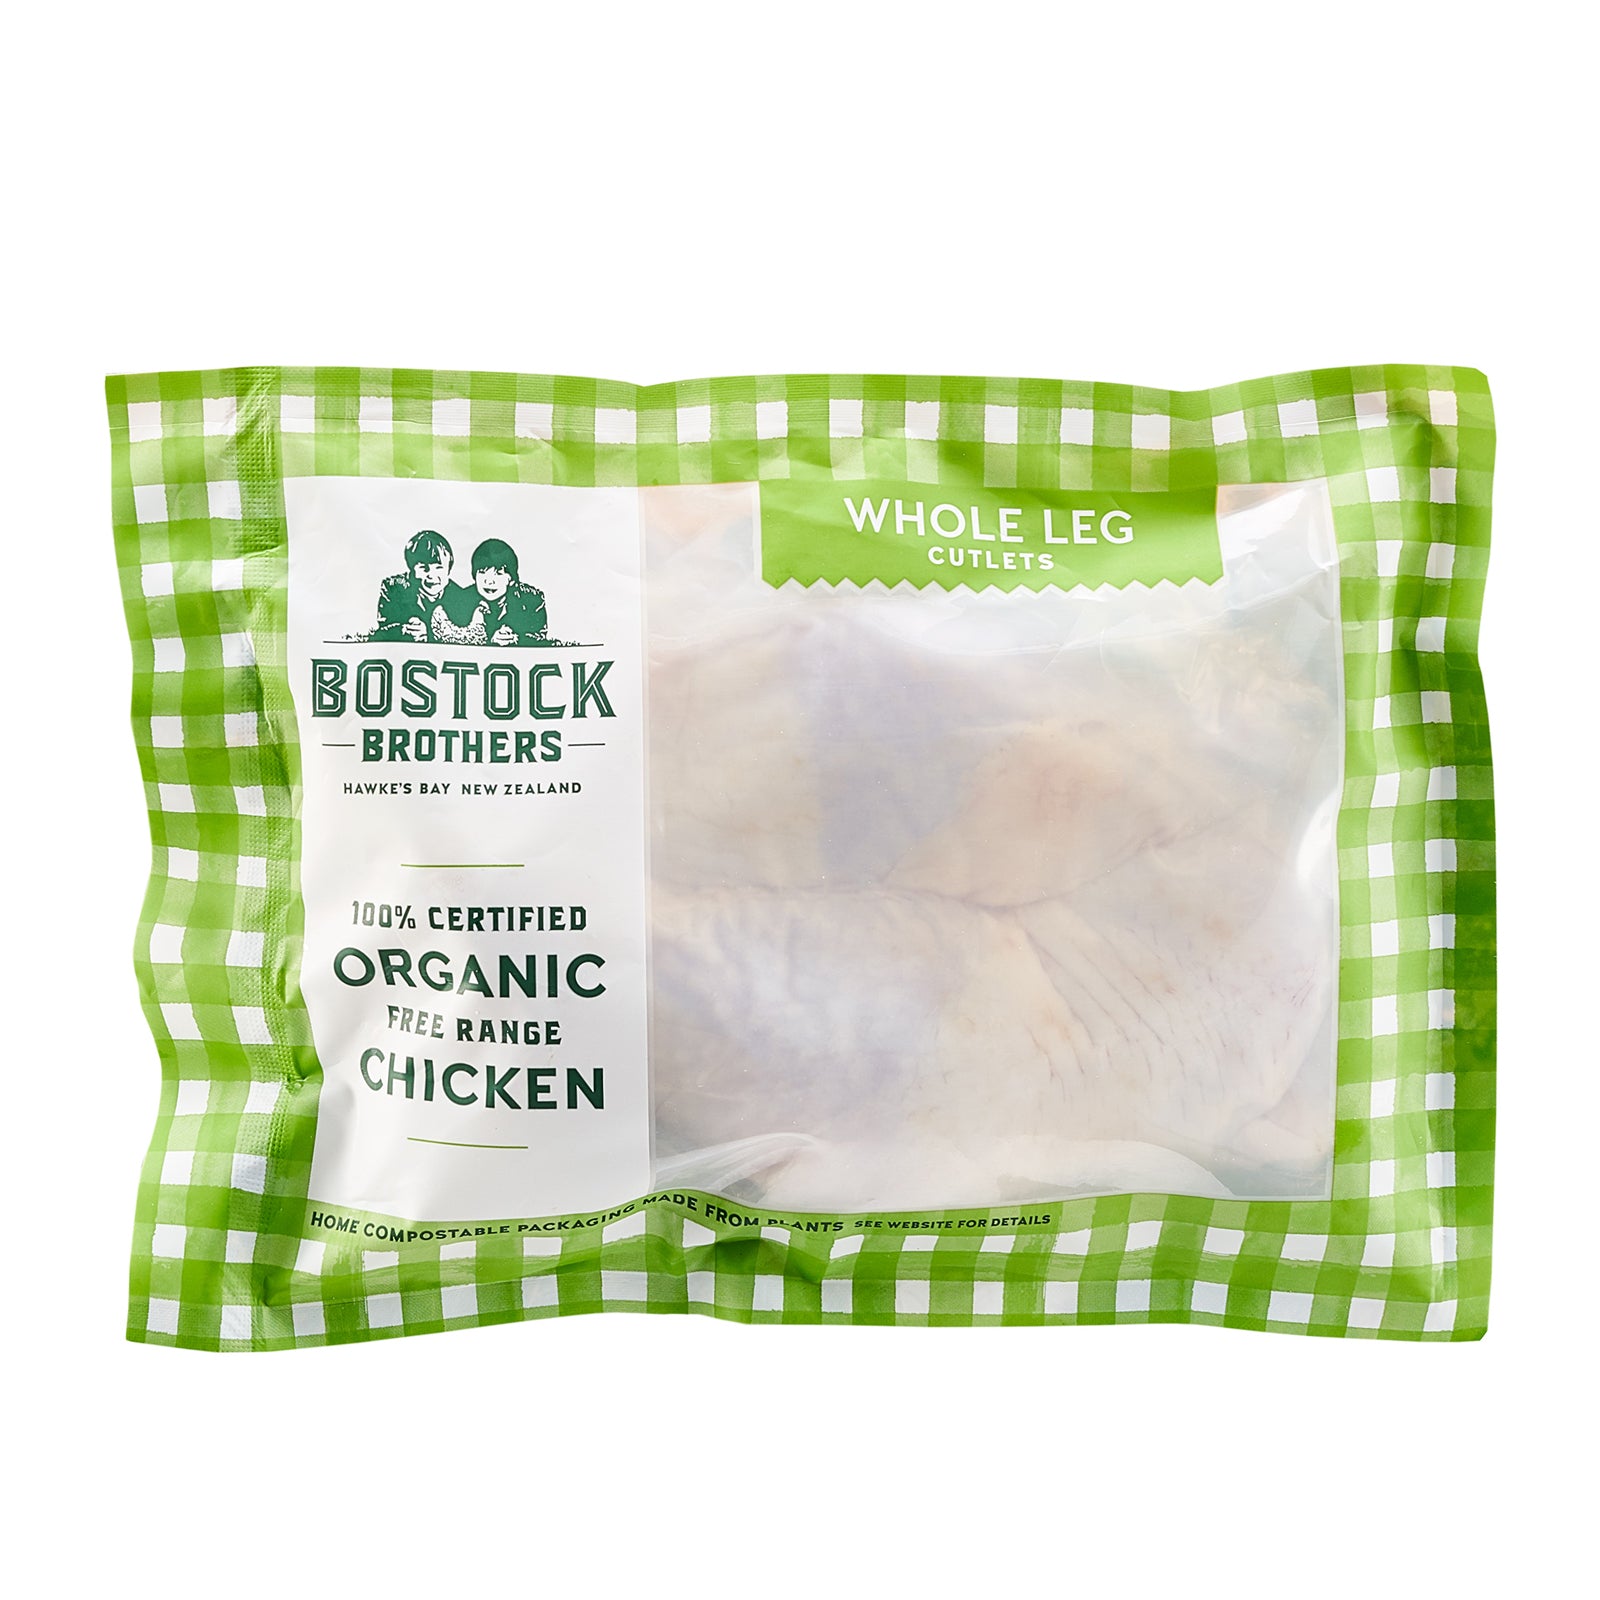 Certified Organic Free-Range Chicken Whole Legs from New Zealand (500g) - Horizon Farms